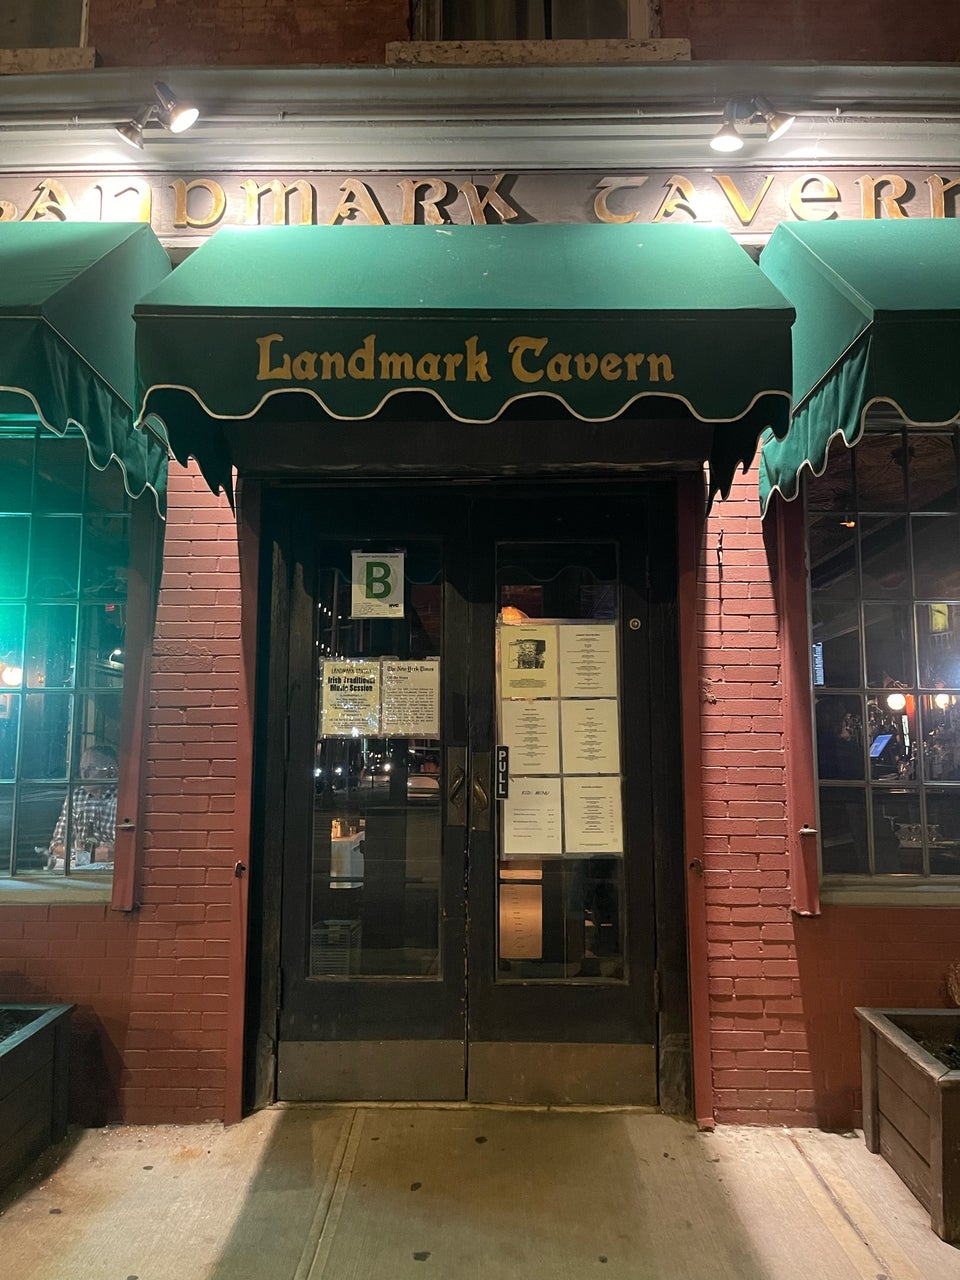 The Landmark Tavern